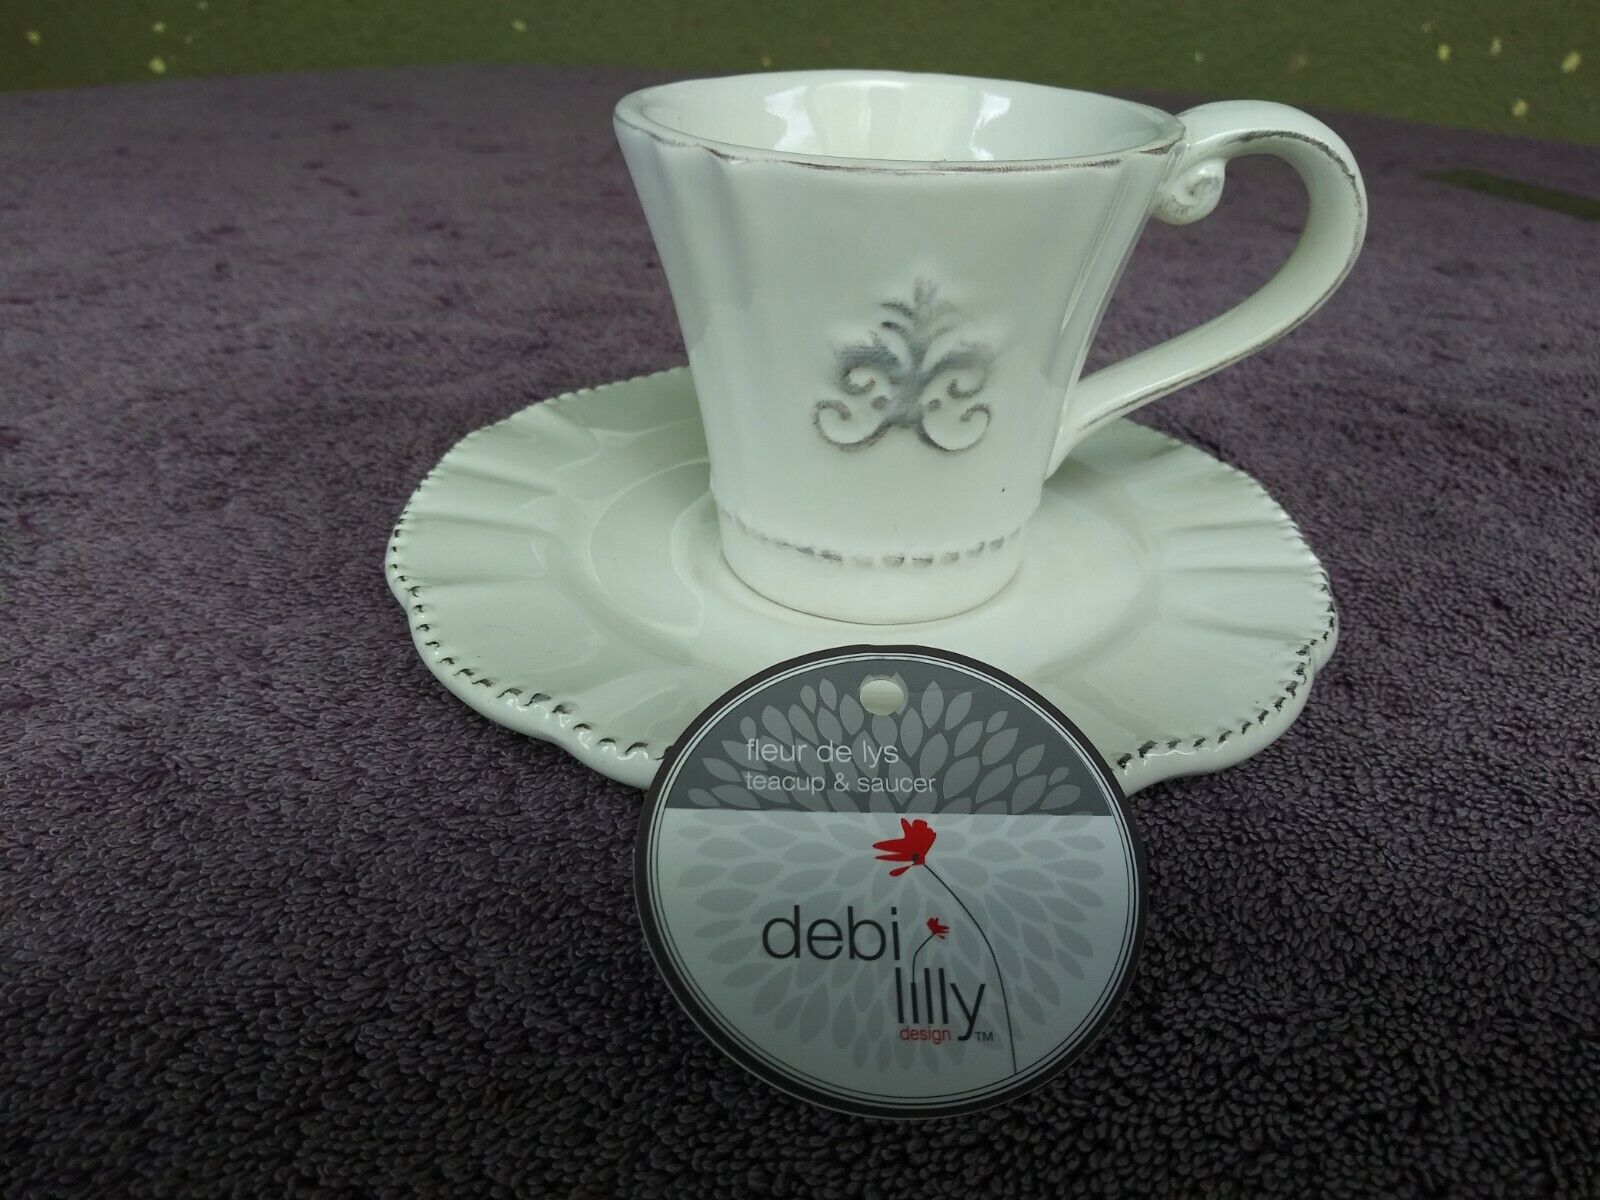 Debi Lilly Tea Cup & Saucer Fleur de lys 4 oz Rare